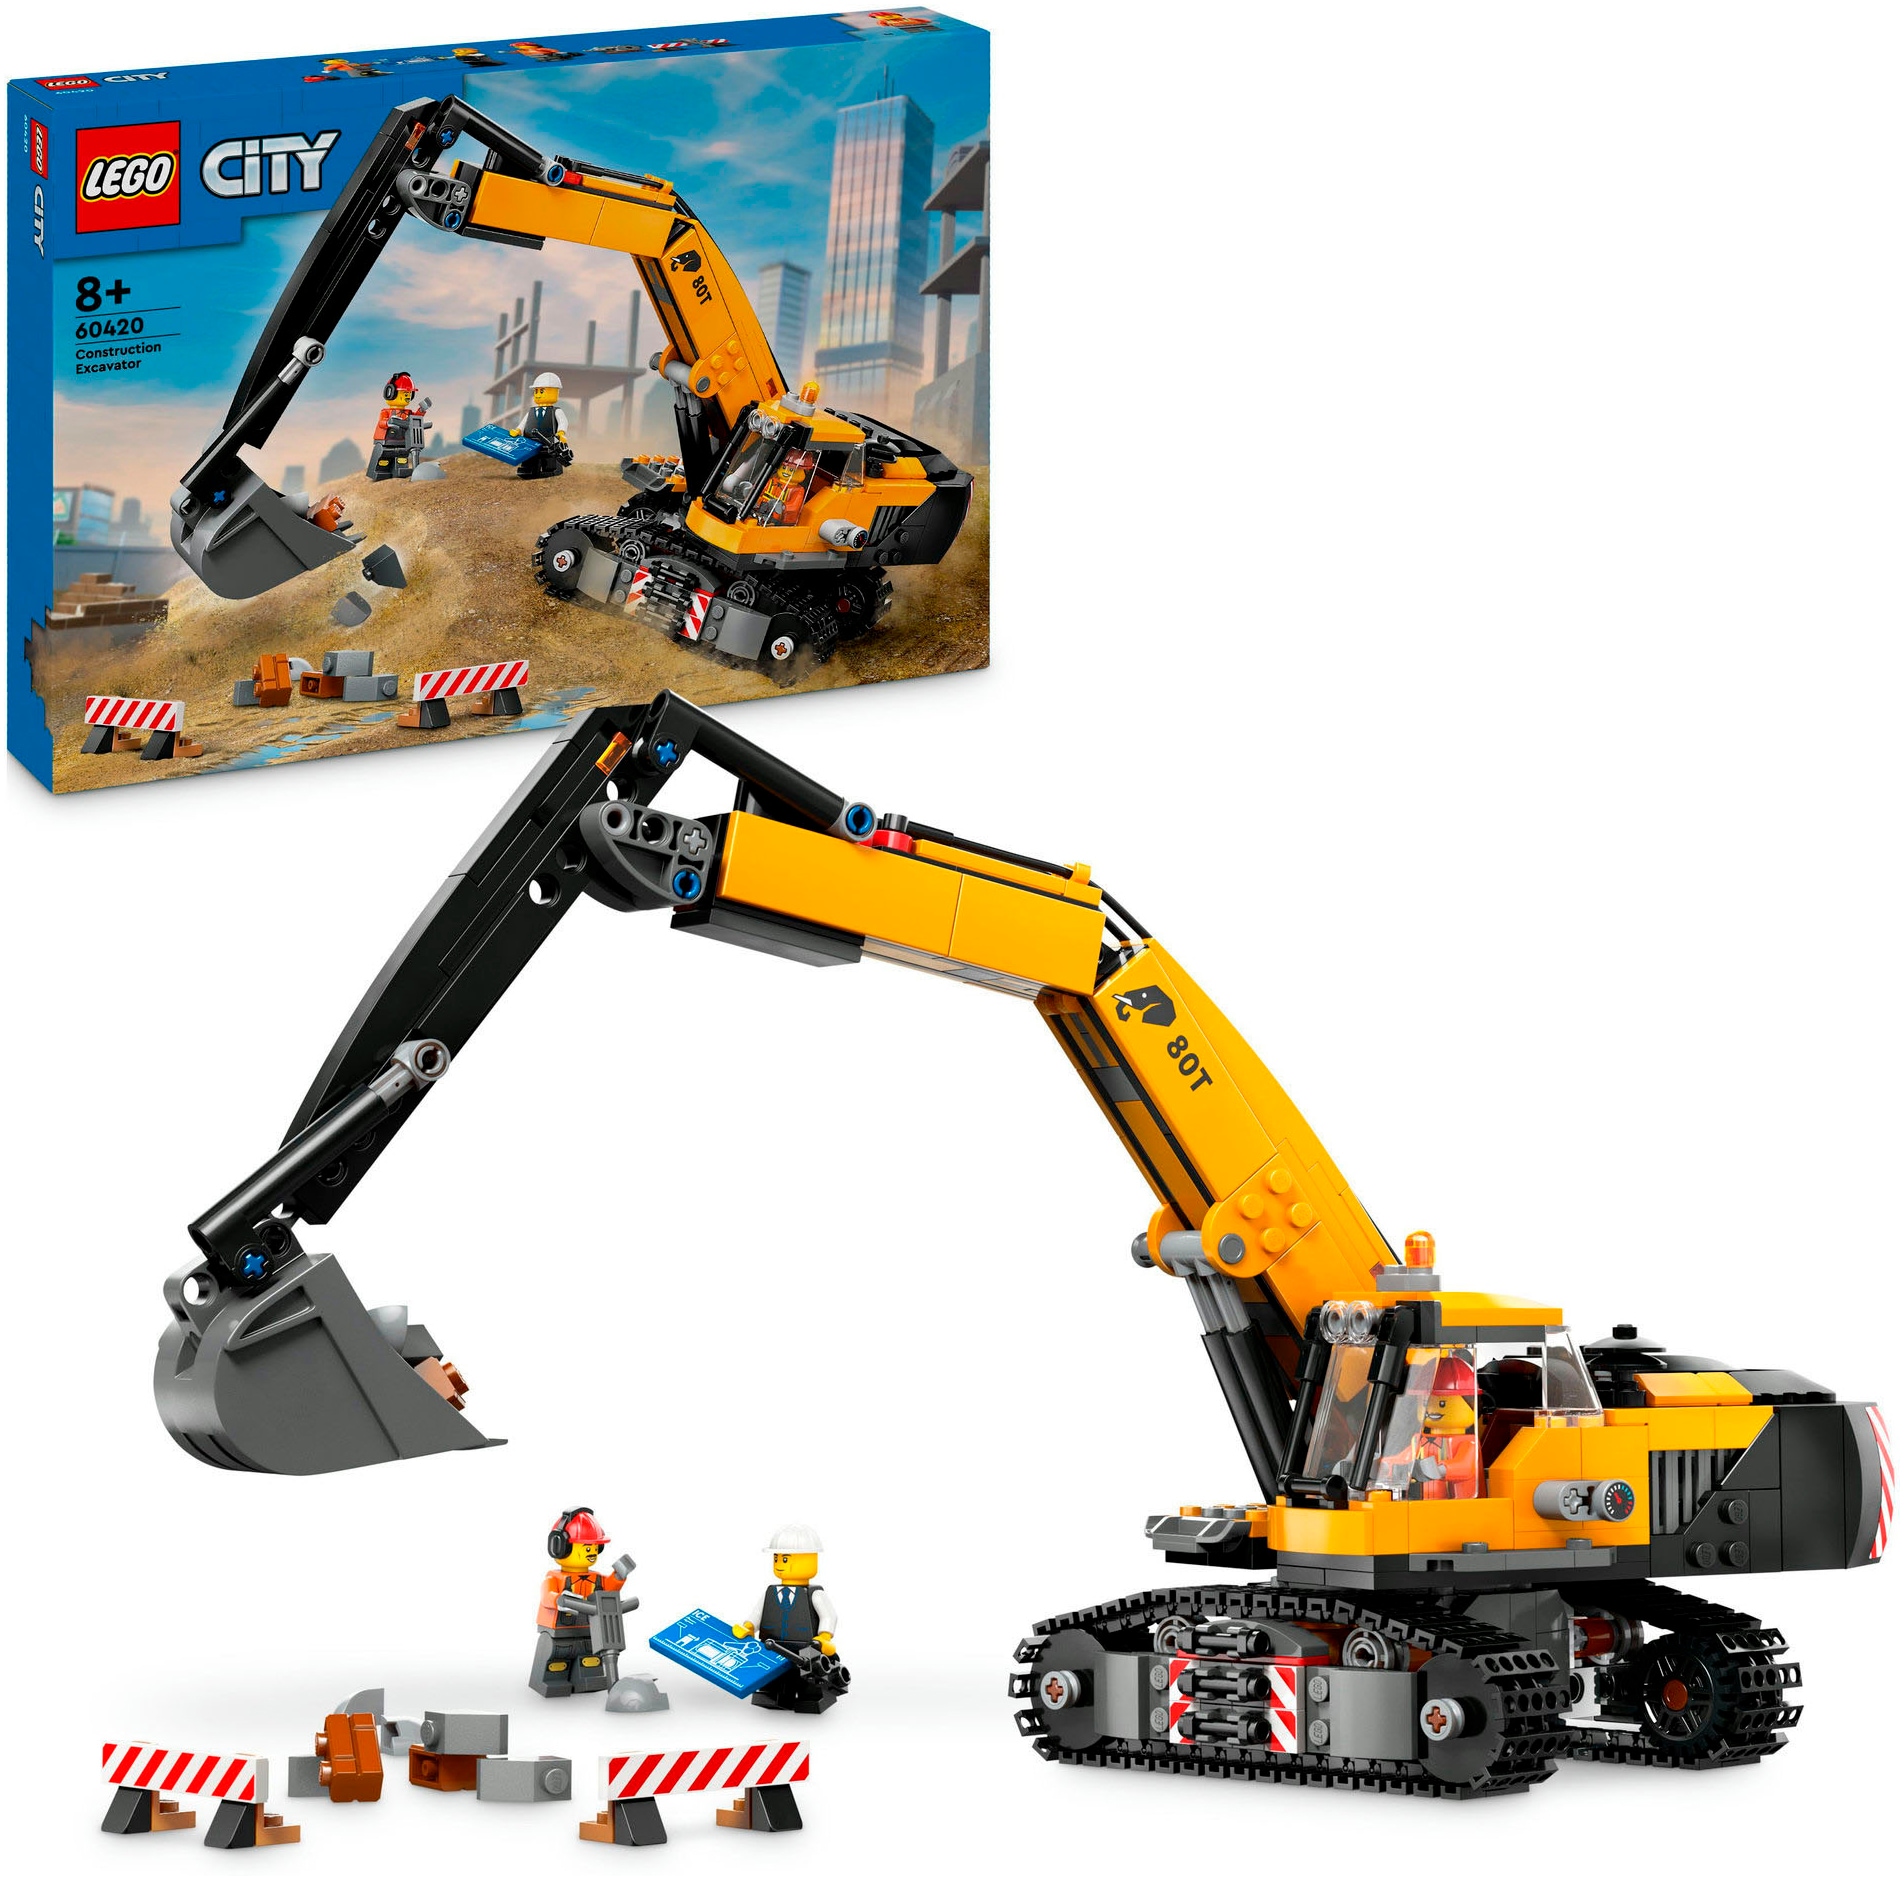 Konstruktionsspielsteine »Raupenbagger (60420), LEGO City«, (633 St.), Made in Europe